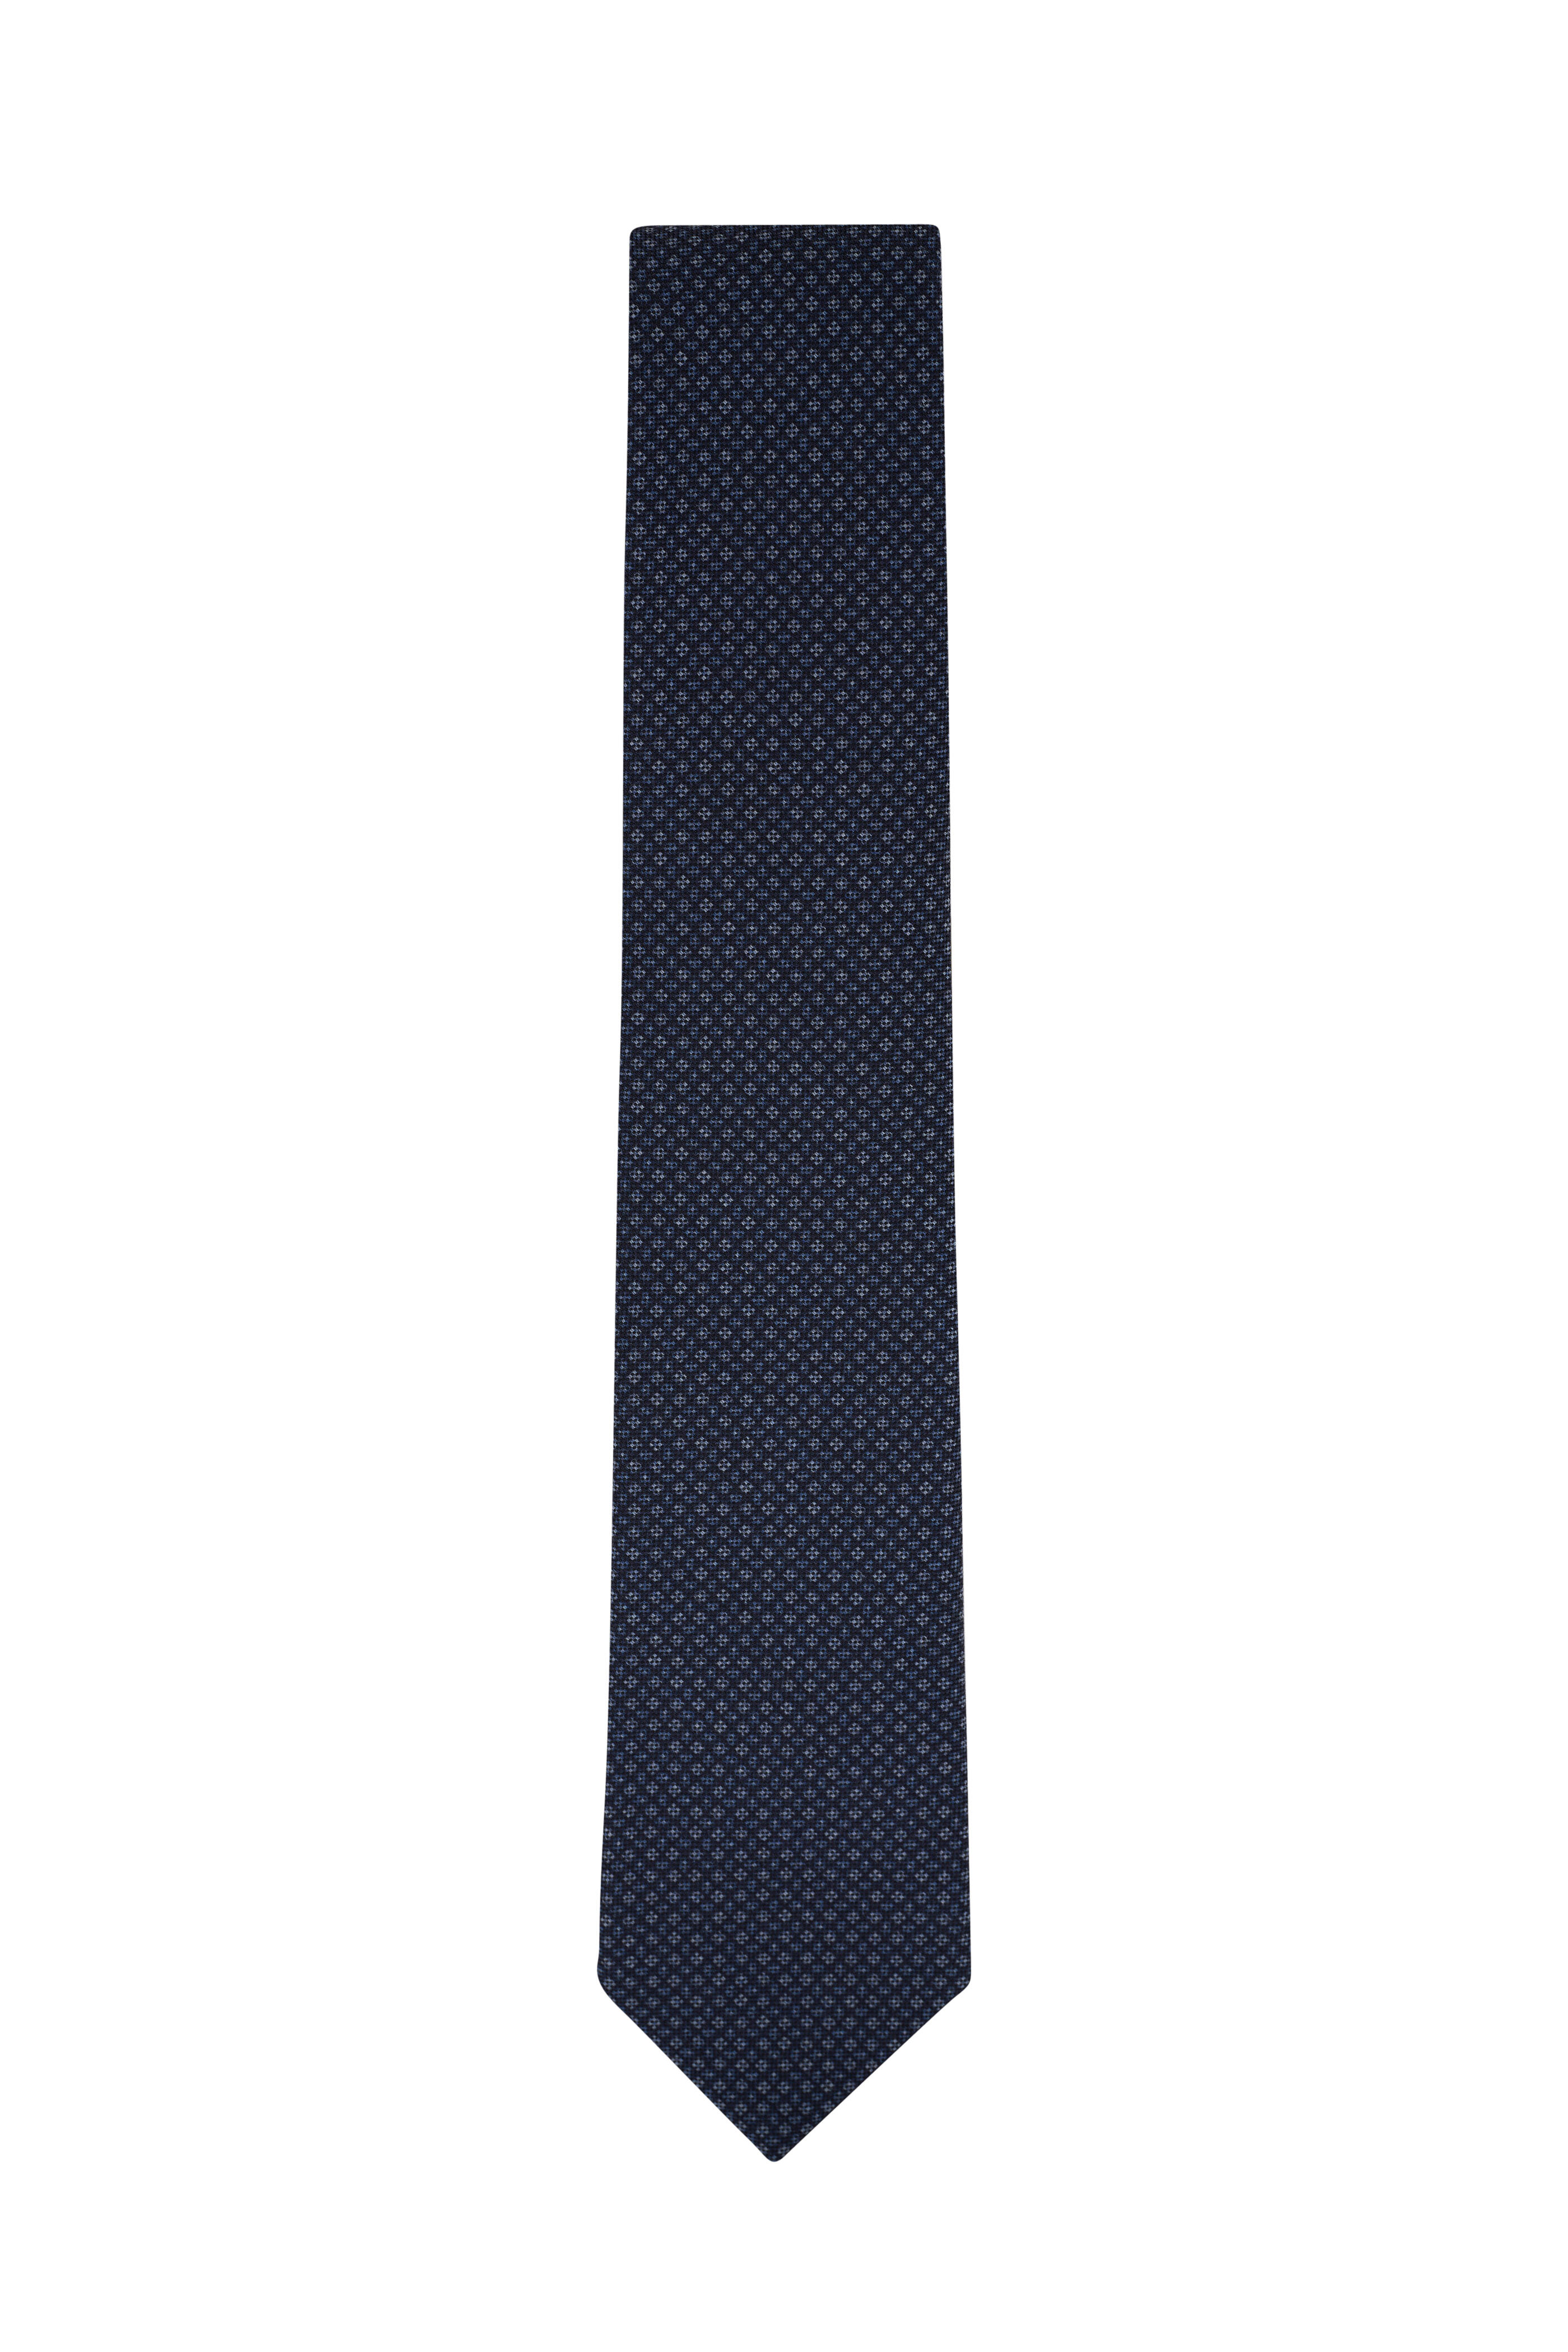 Zegna - Blue Geometric Print Wool & Silk Necktie